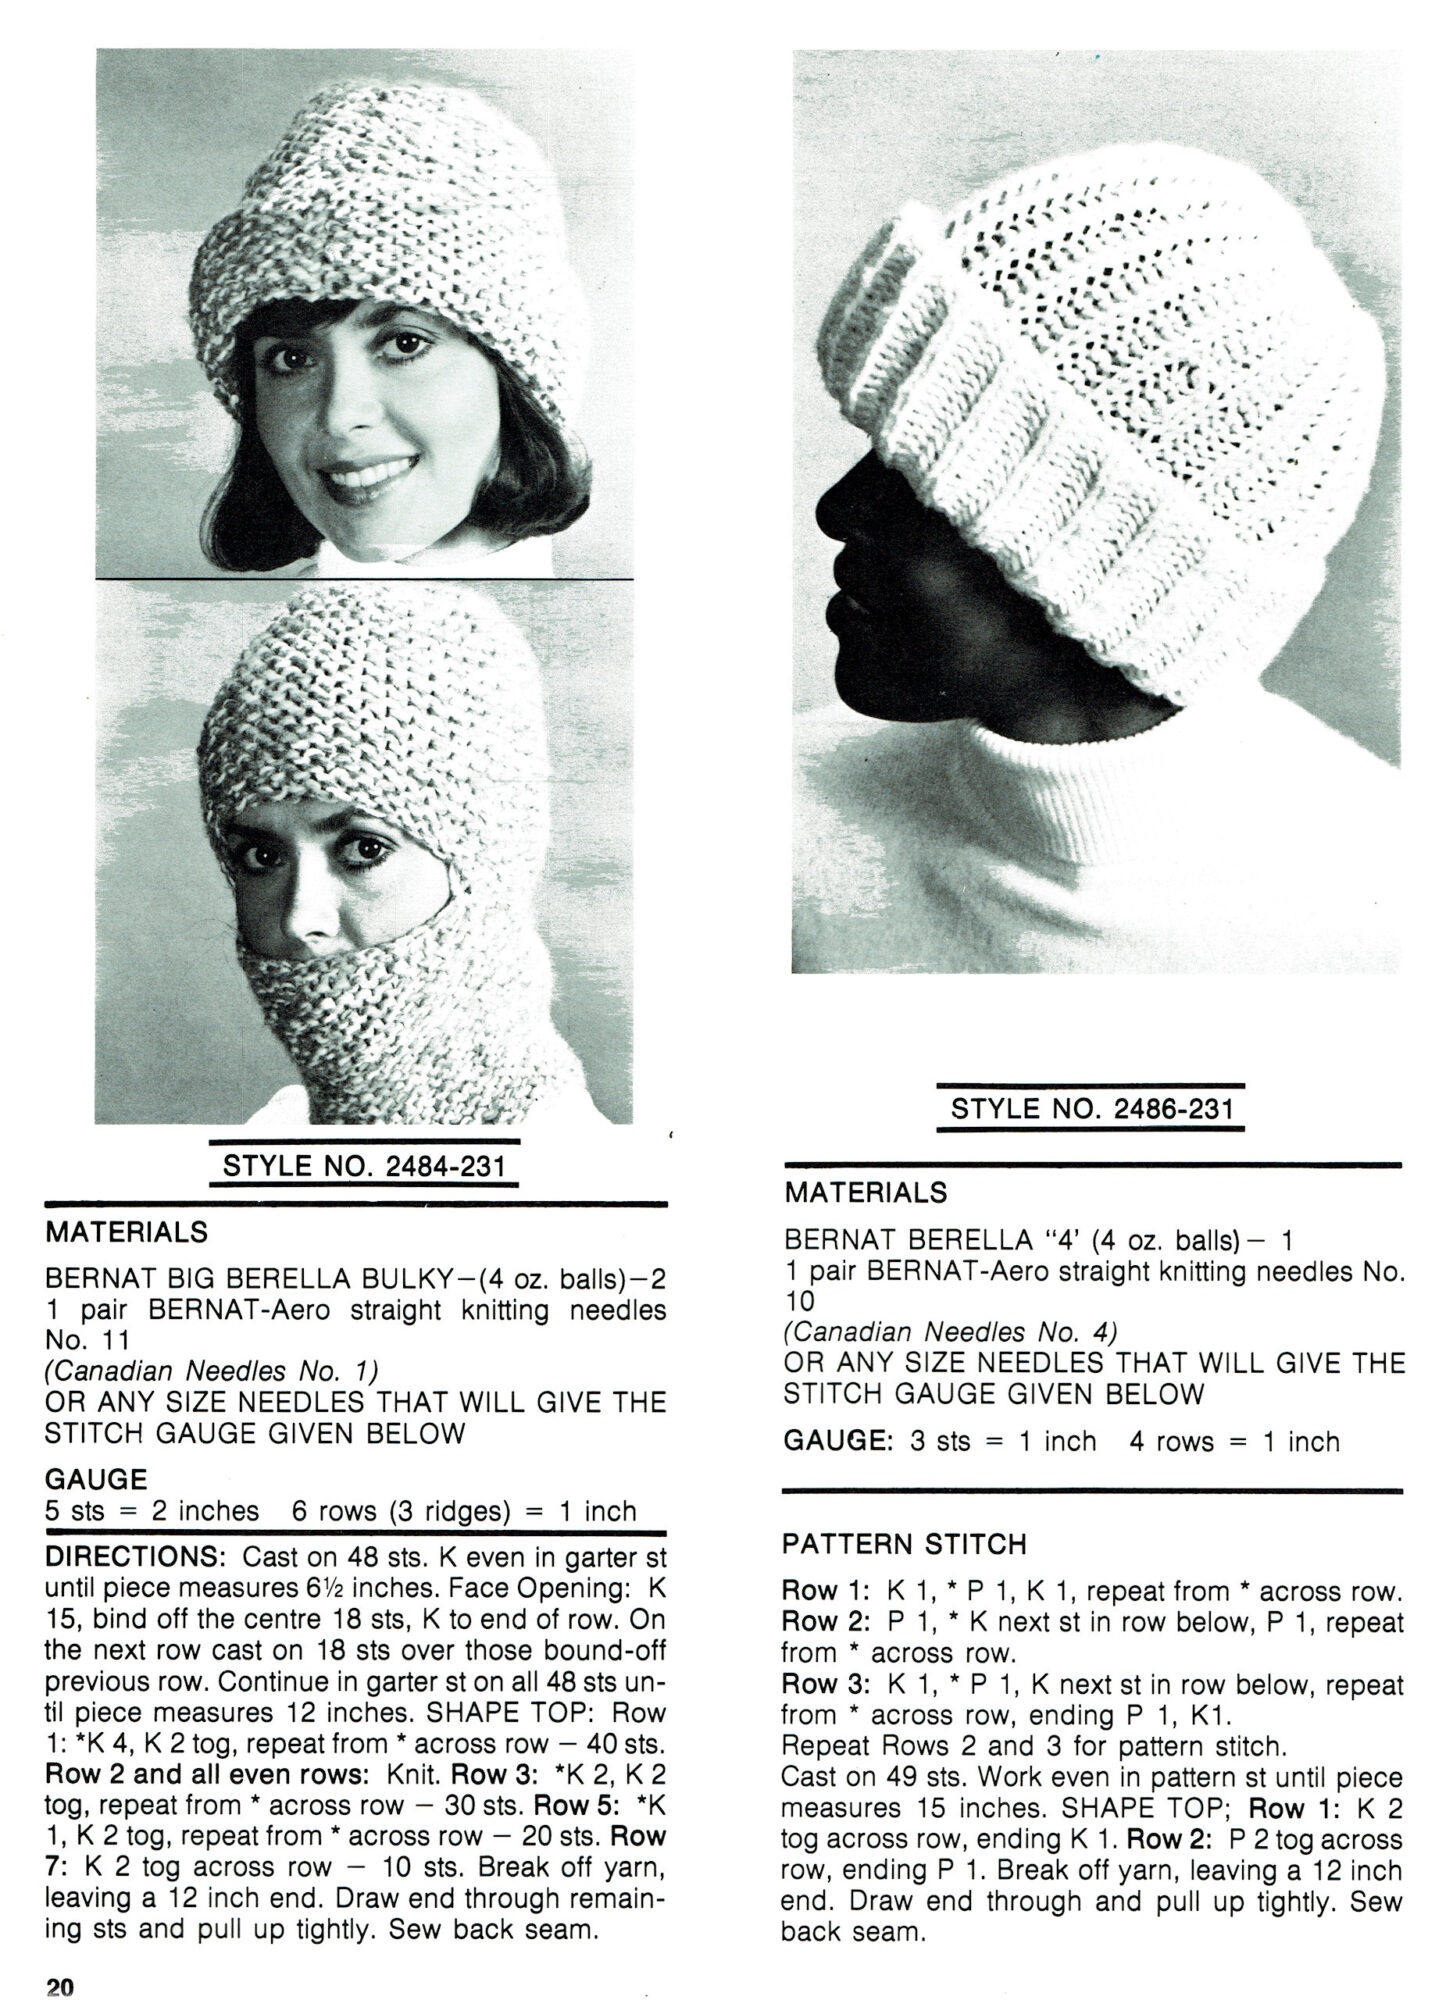 Roll Hat Vintage Knitting Pattern